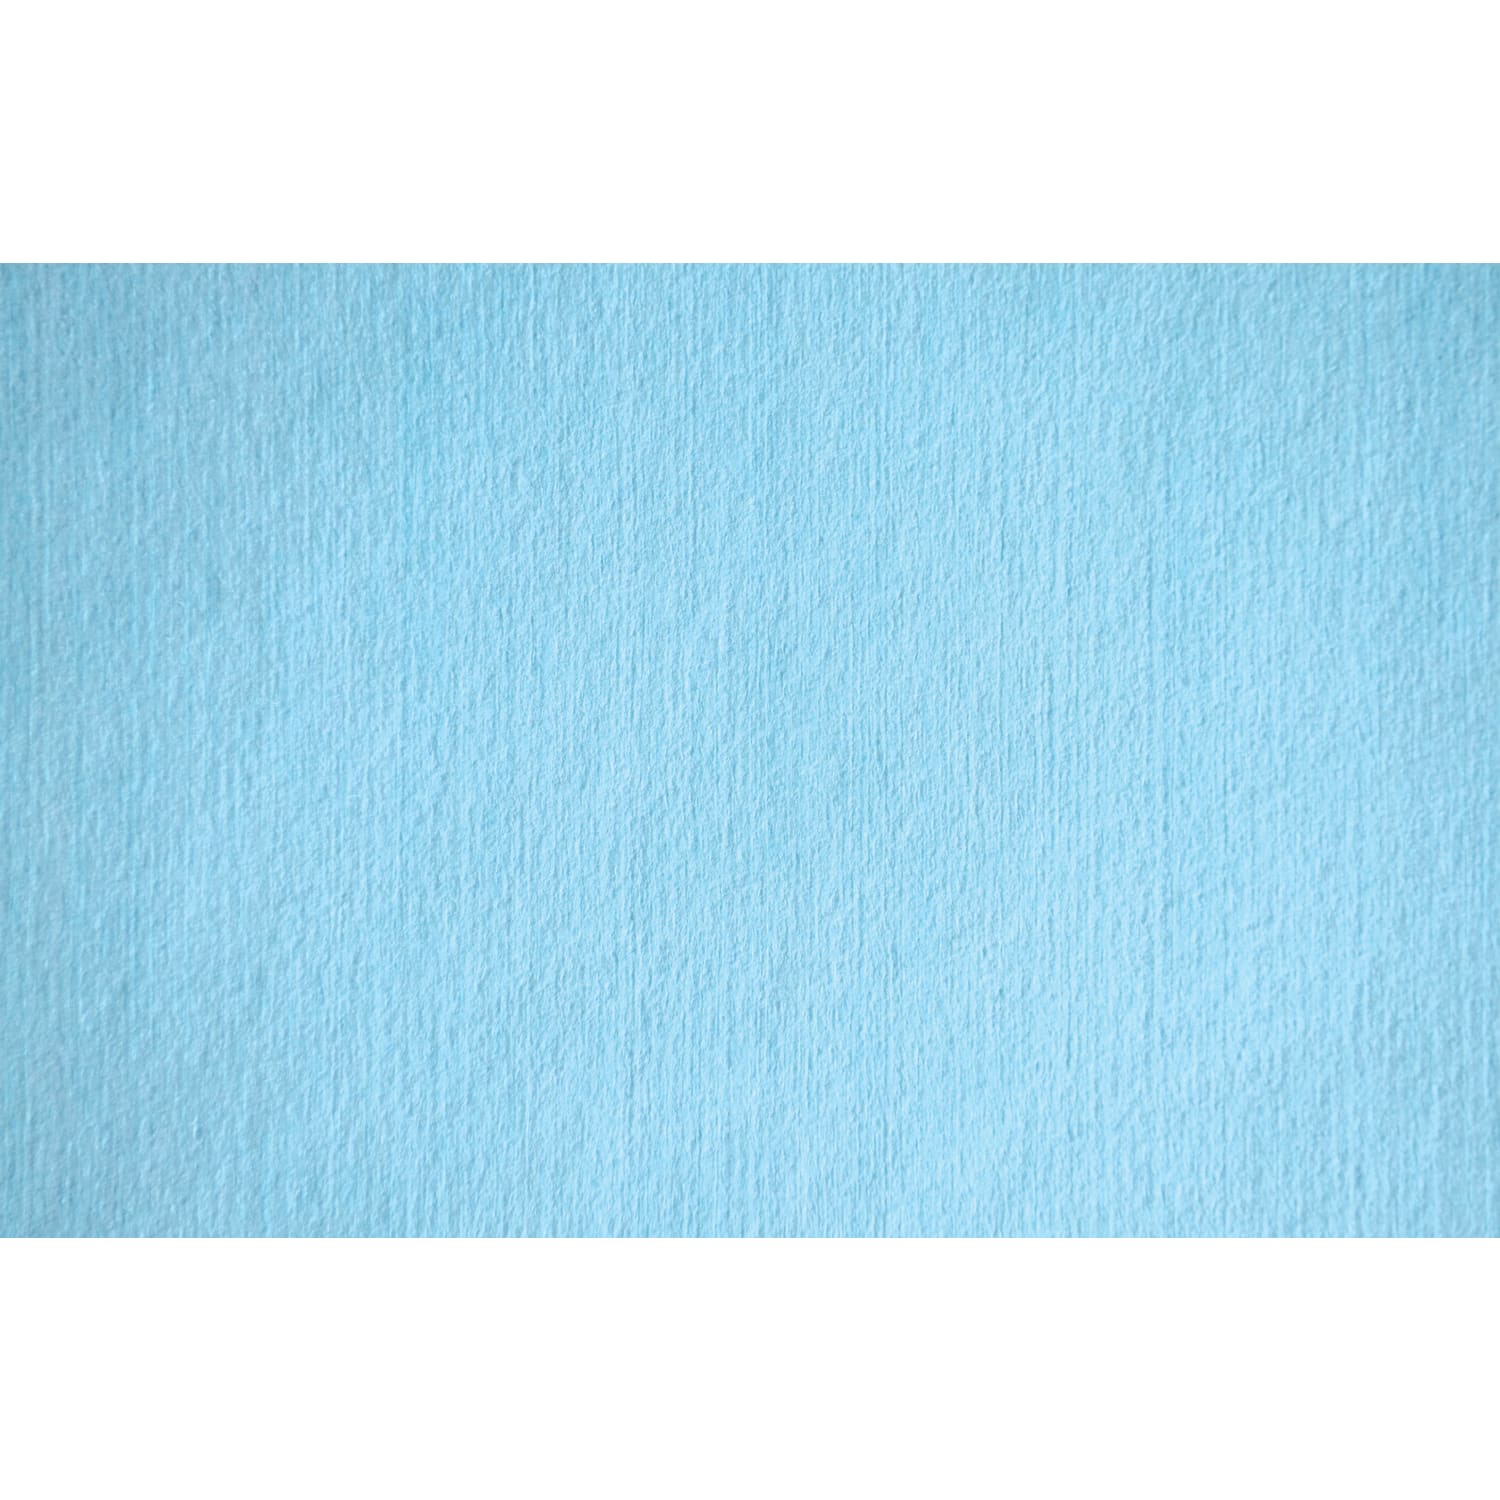 Essuyage non tissé Profitextra bleu 38 x 30 cm photo du produit